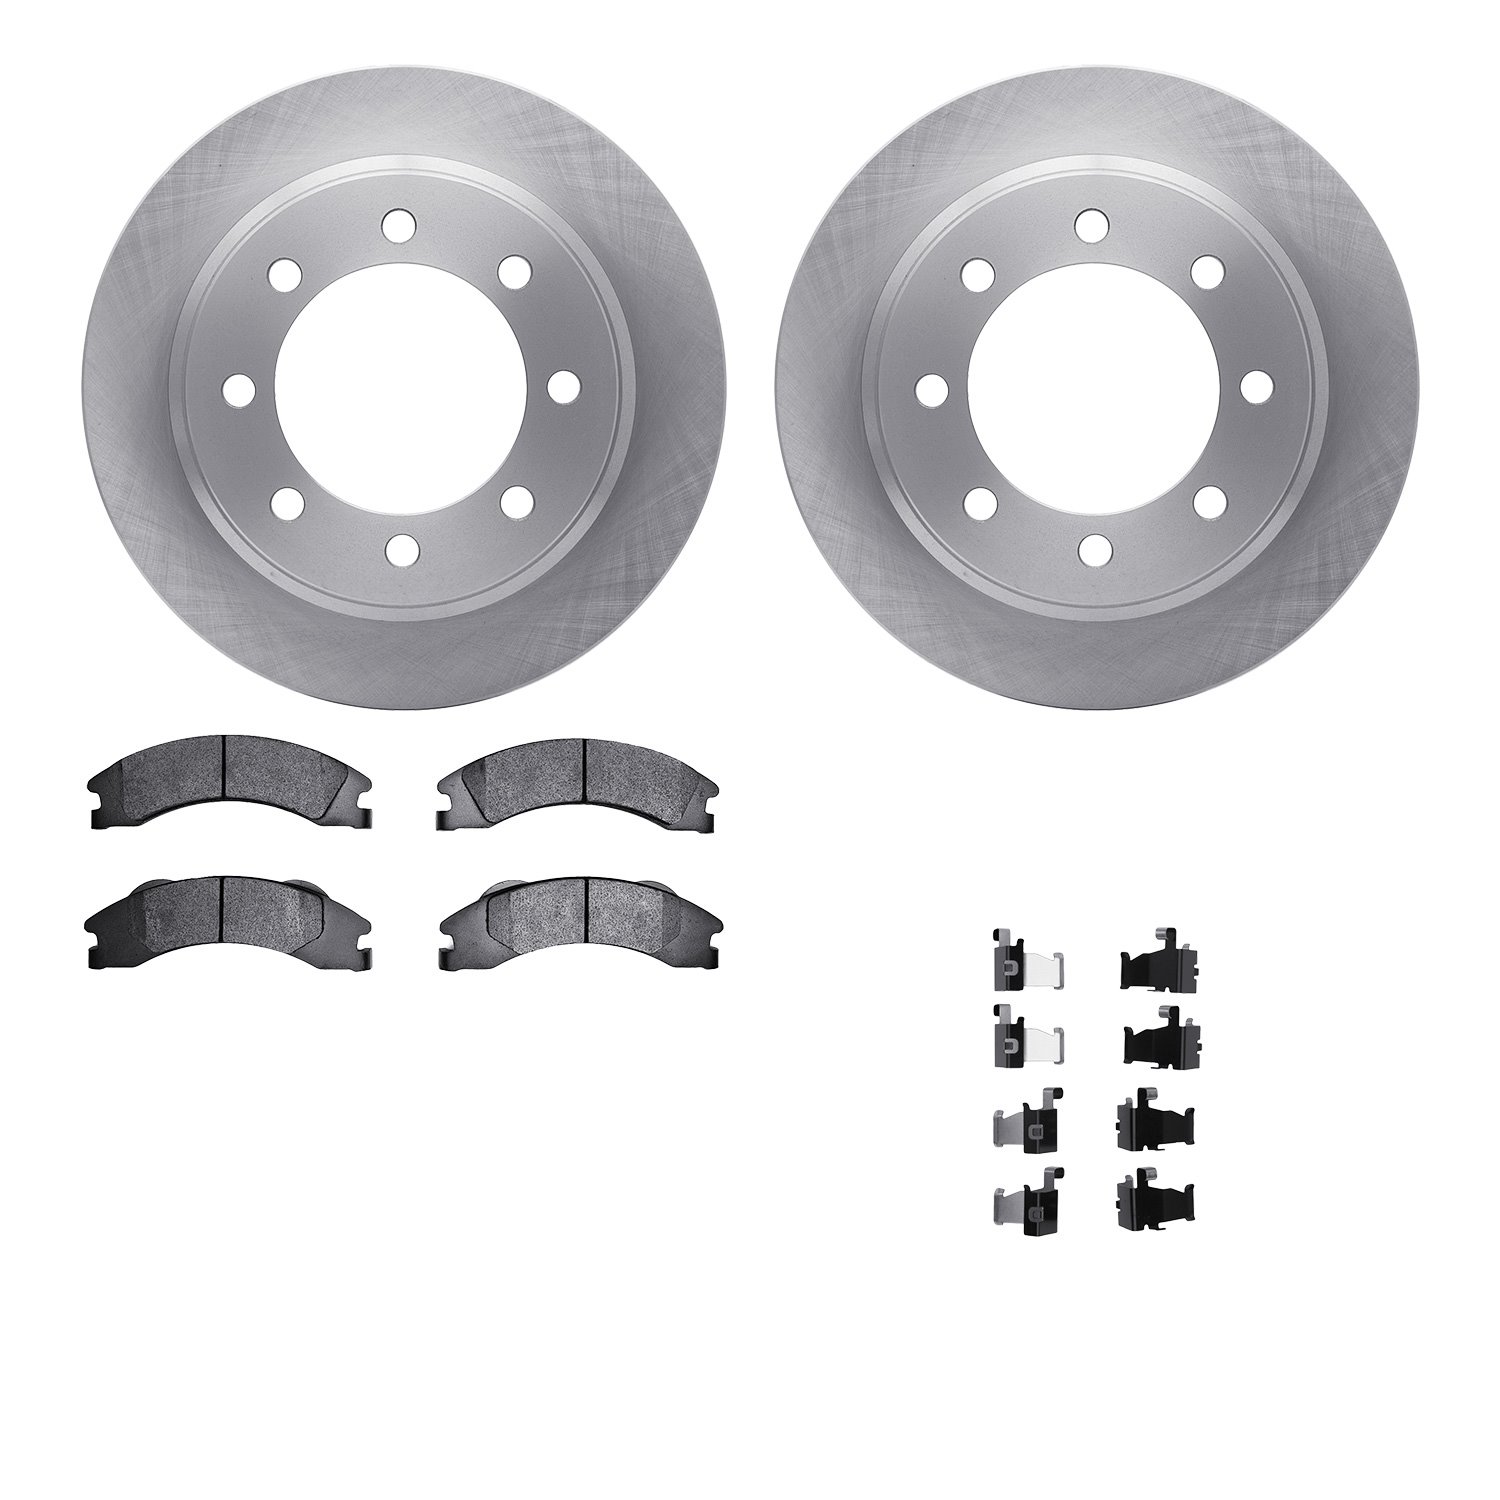 6212-99654 Brake Rotors w/Heavy-Duty Brake Pads Kit & Hardware, Fits Select Ford/Lincoln/Mercury/Mazda, Position: Rear